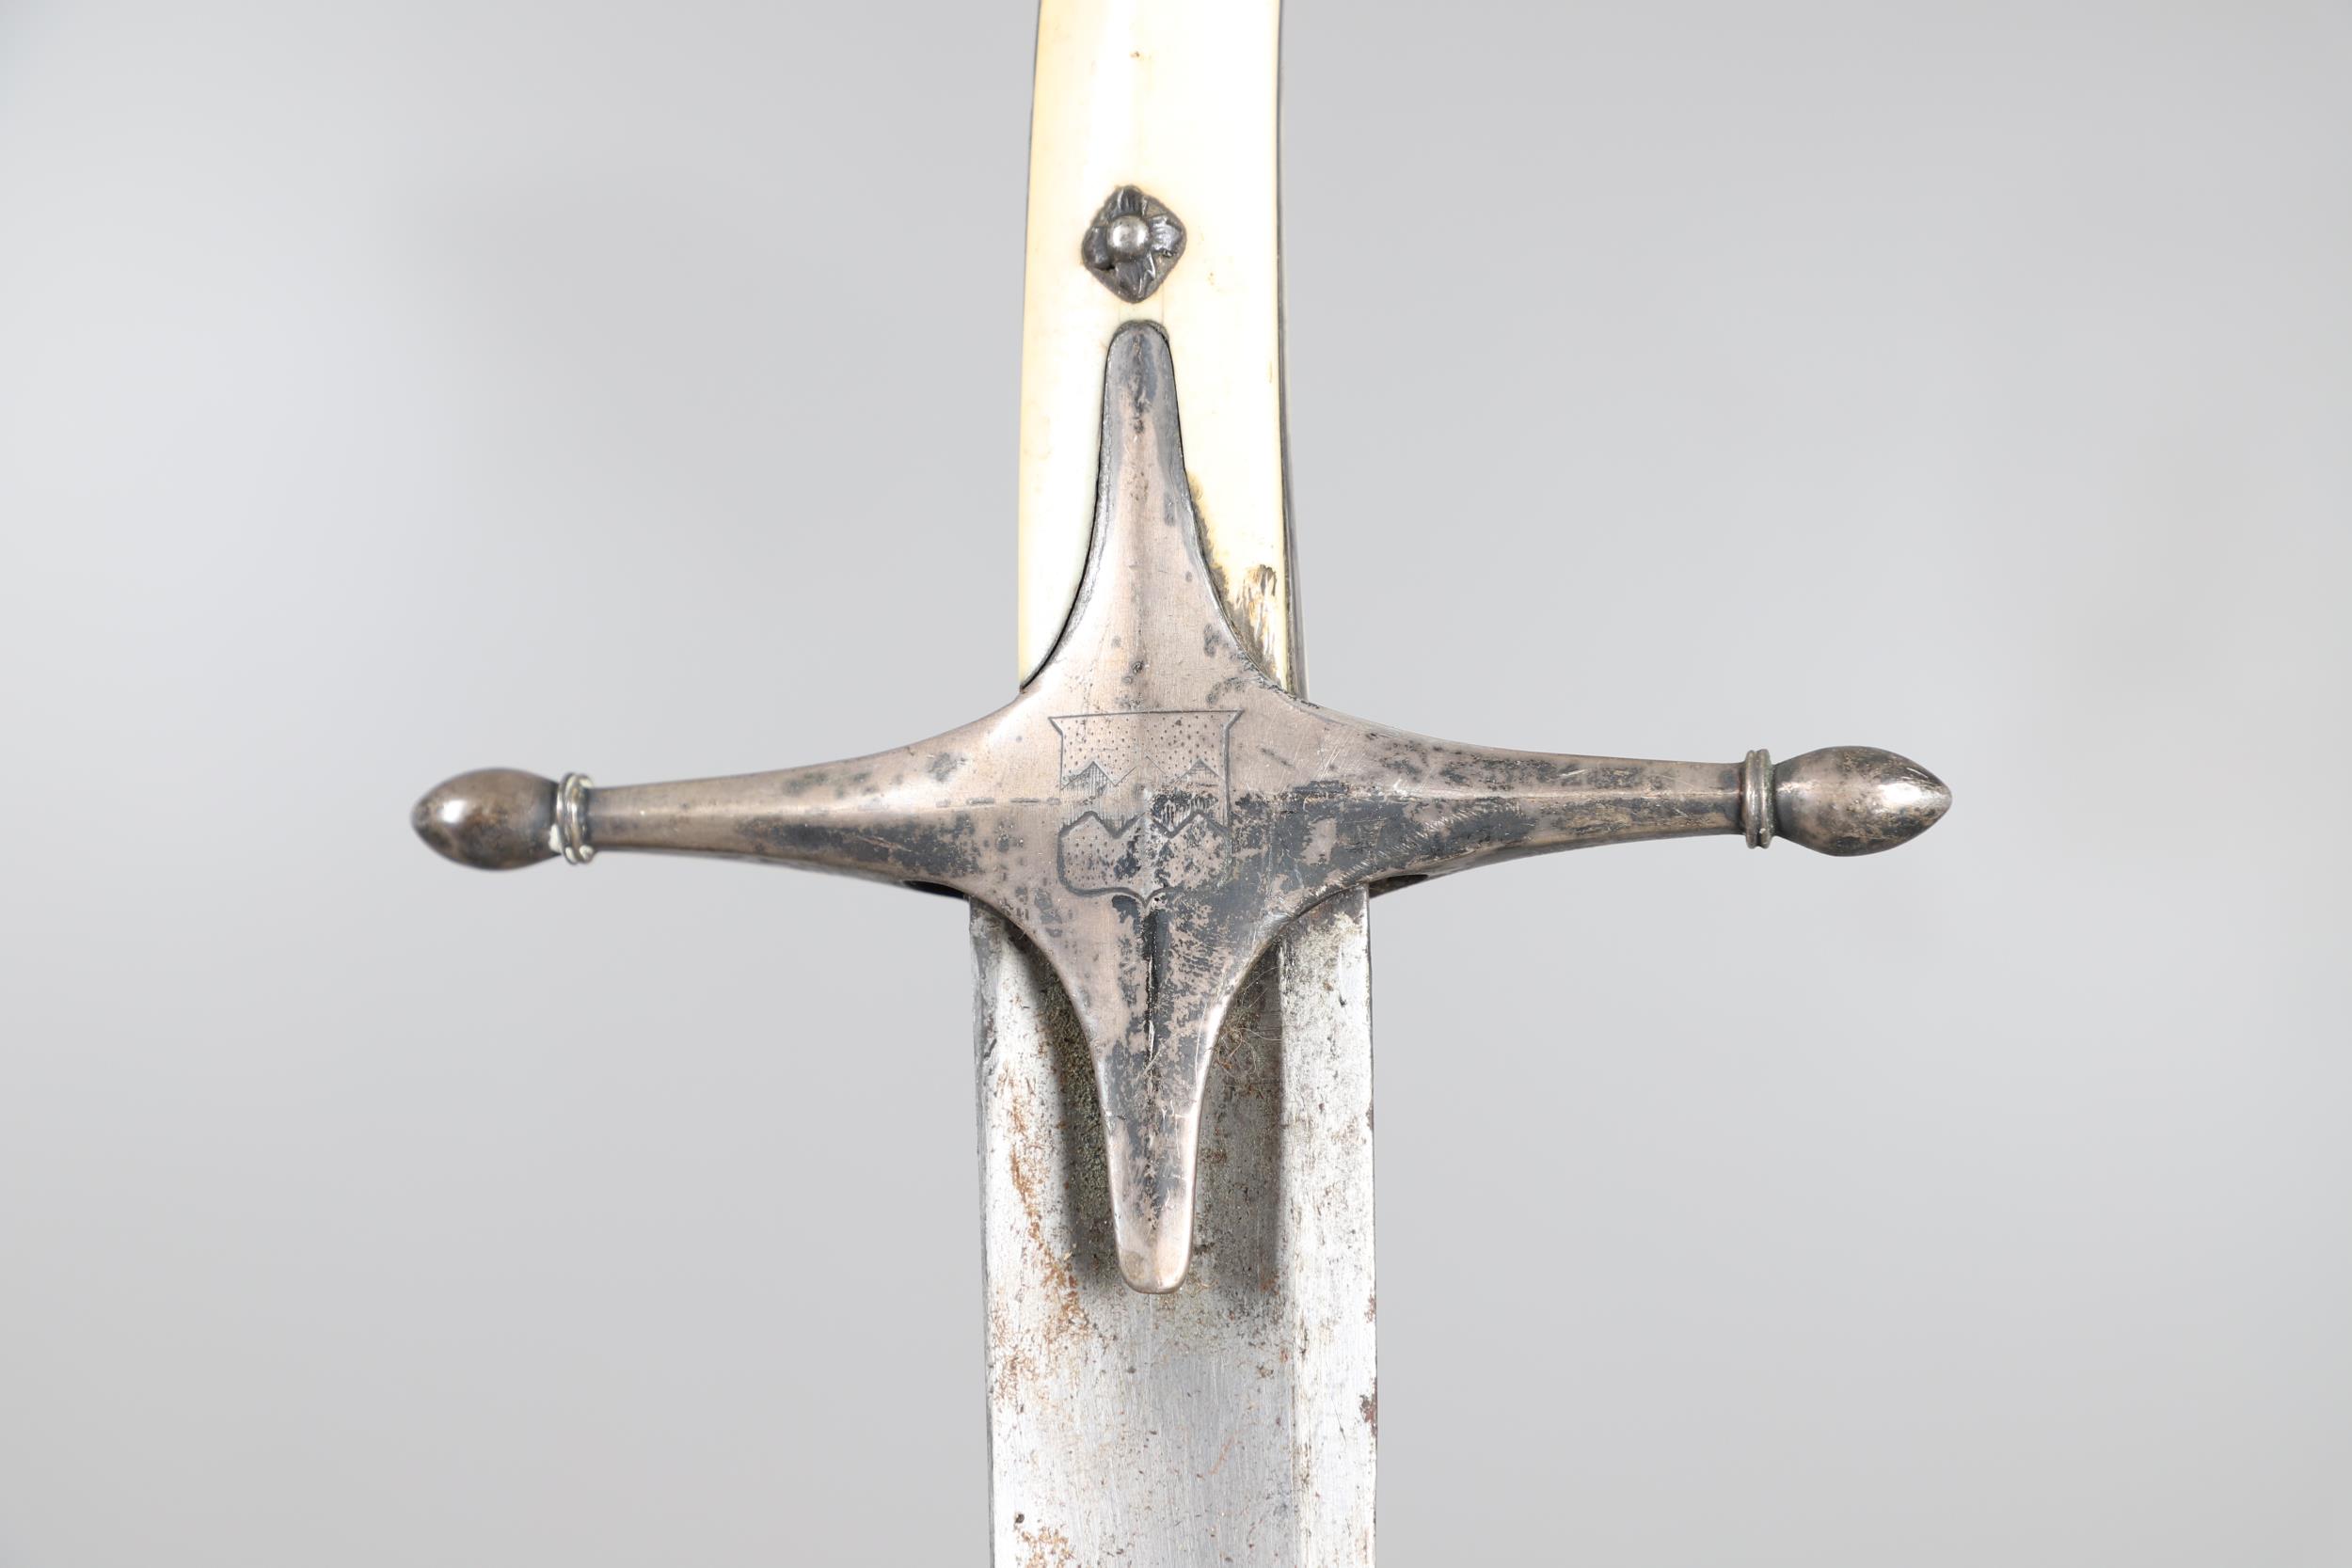 A NINETEENTH CENTURY IVORY HANDLED MAMELUKE SWORD MARKED FOR THE VAVASOUR FAMILY. - Image 14 of 17